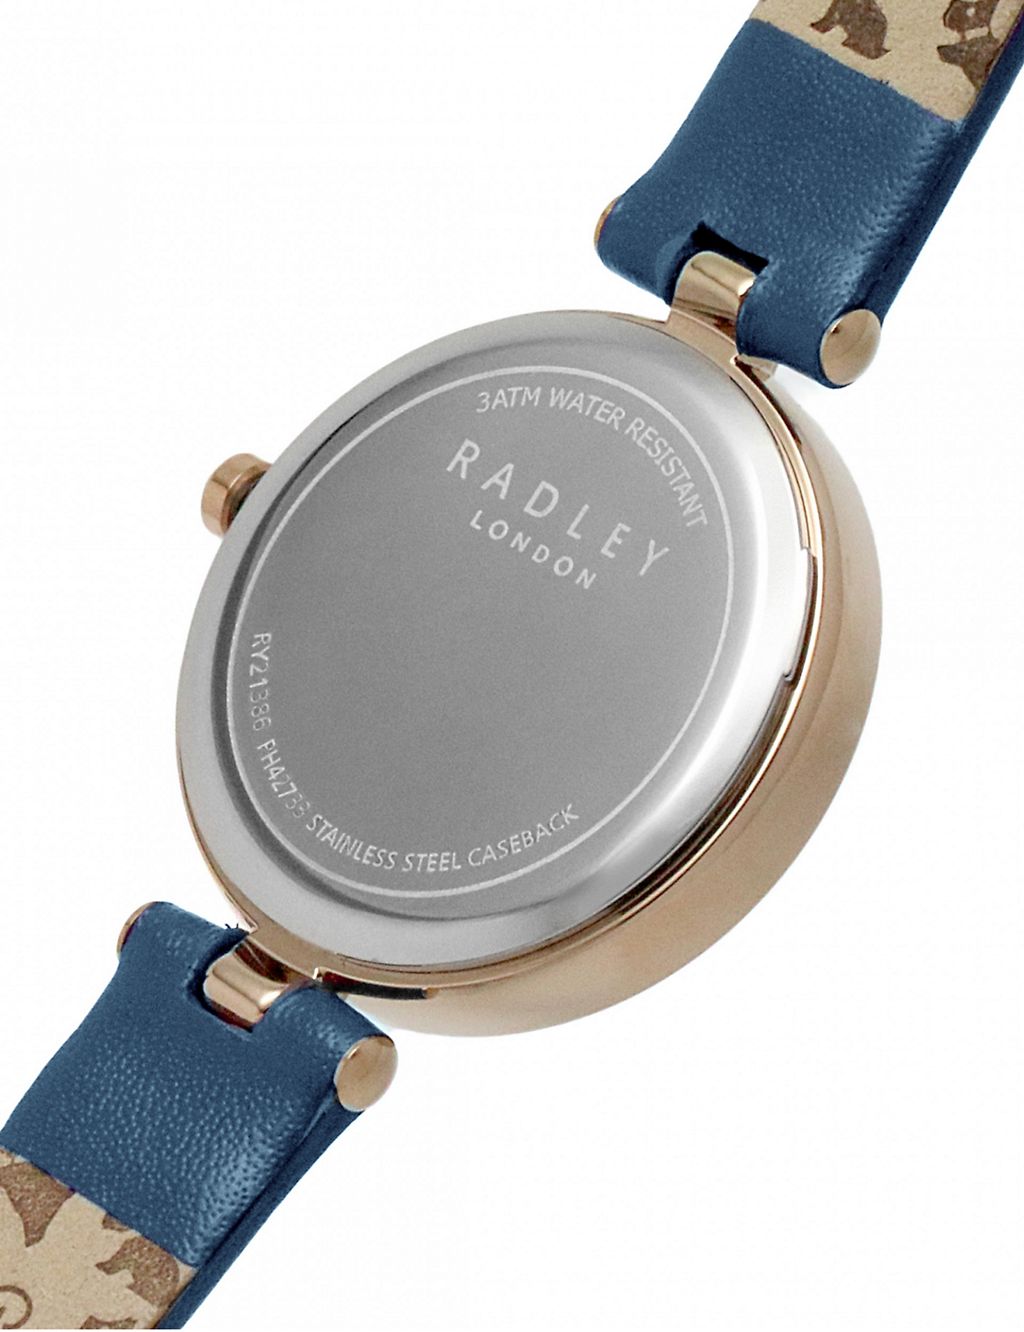 Radley Scottie Dog Blue Leather Watch 6 of 6